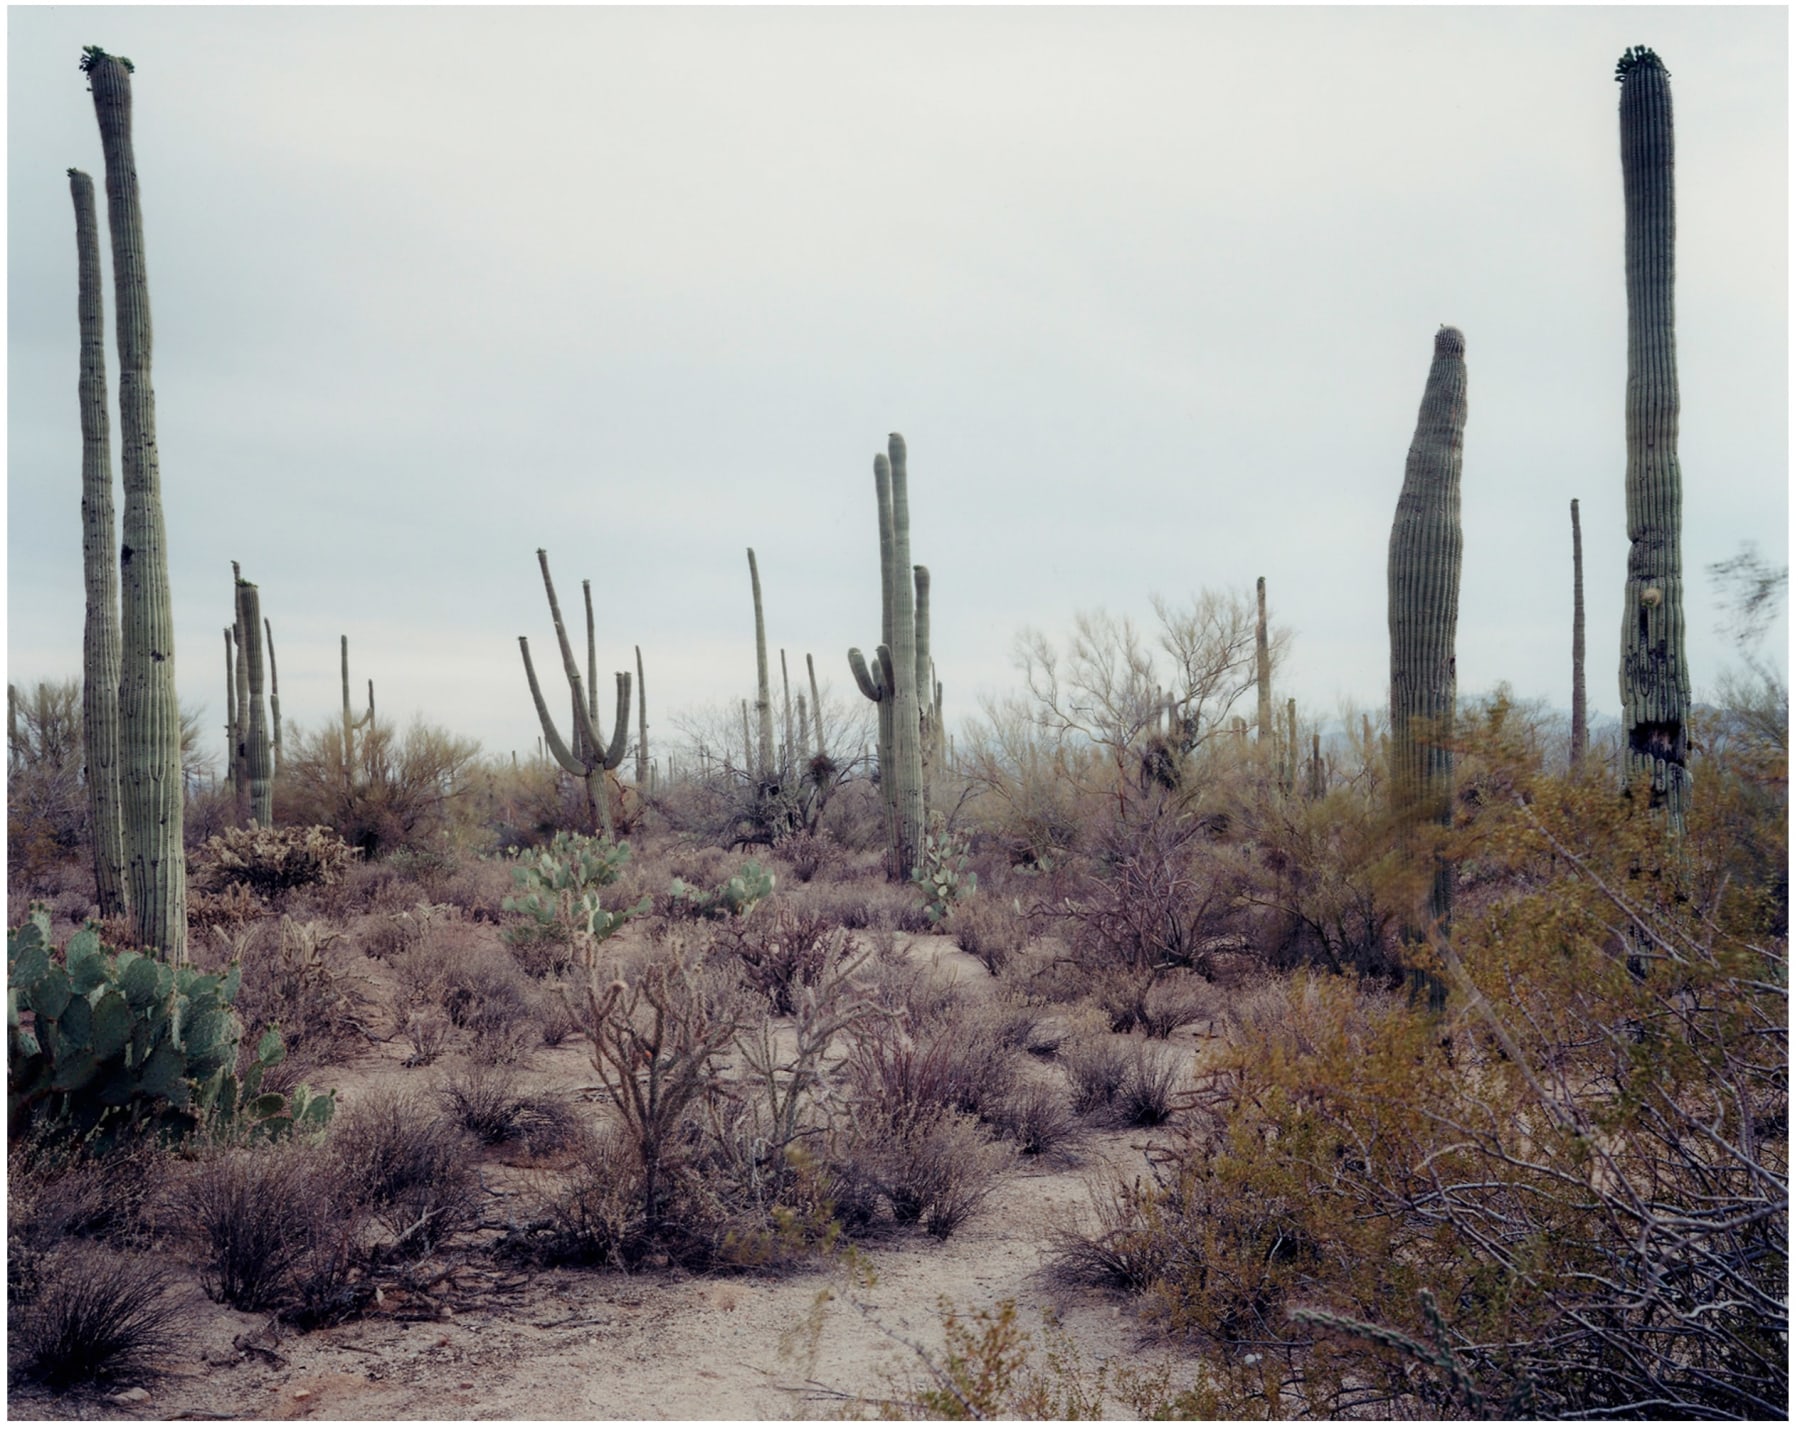 Cactus 1, Dying Forests, Arizona,&nbsp;2002. Archival pigment print, 50 x 60 inches.&nbsp;, &nbsp;